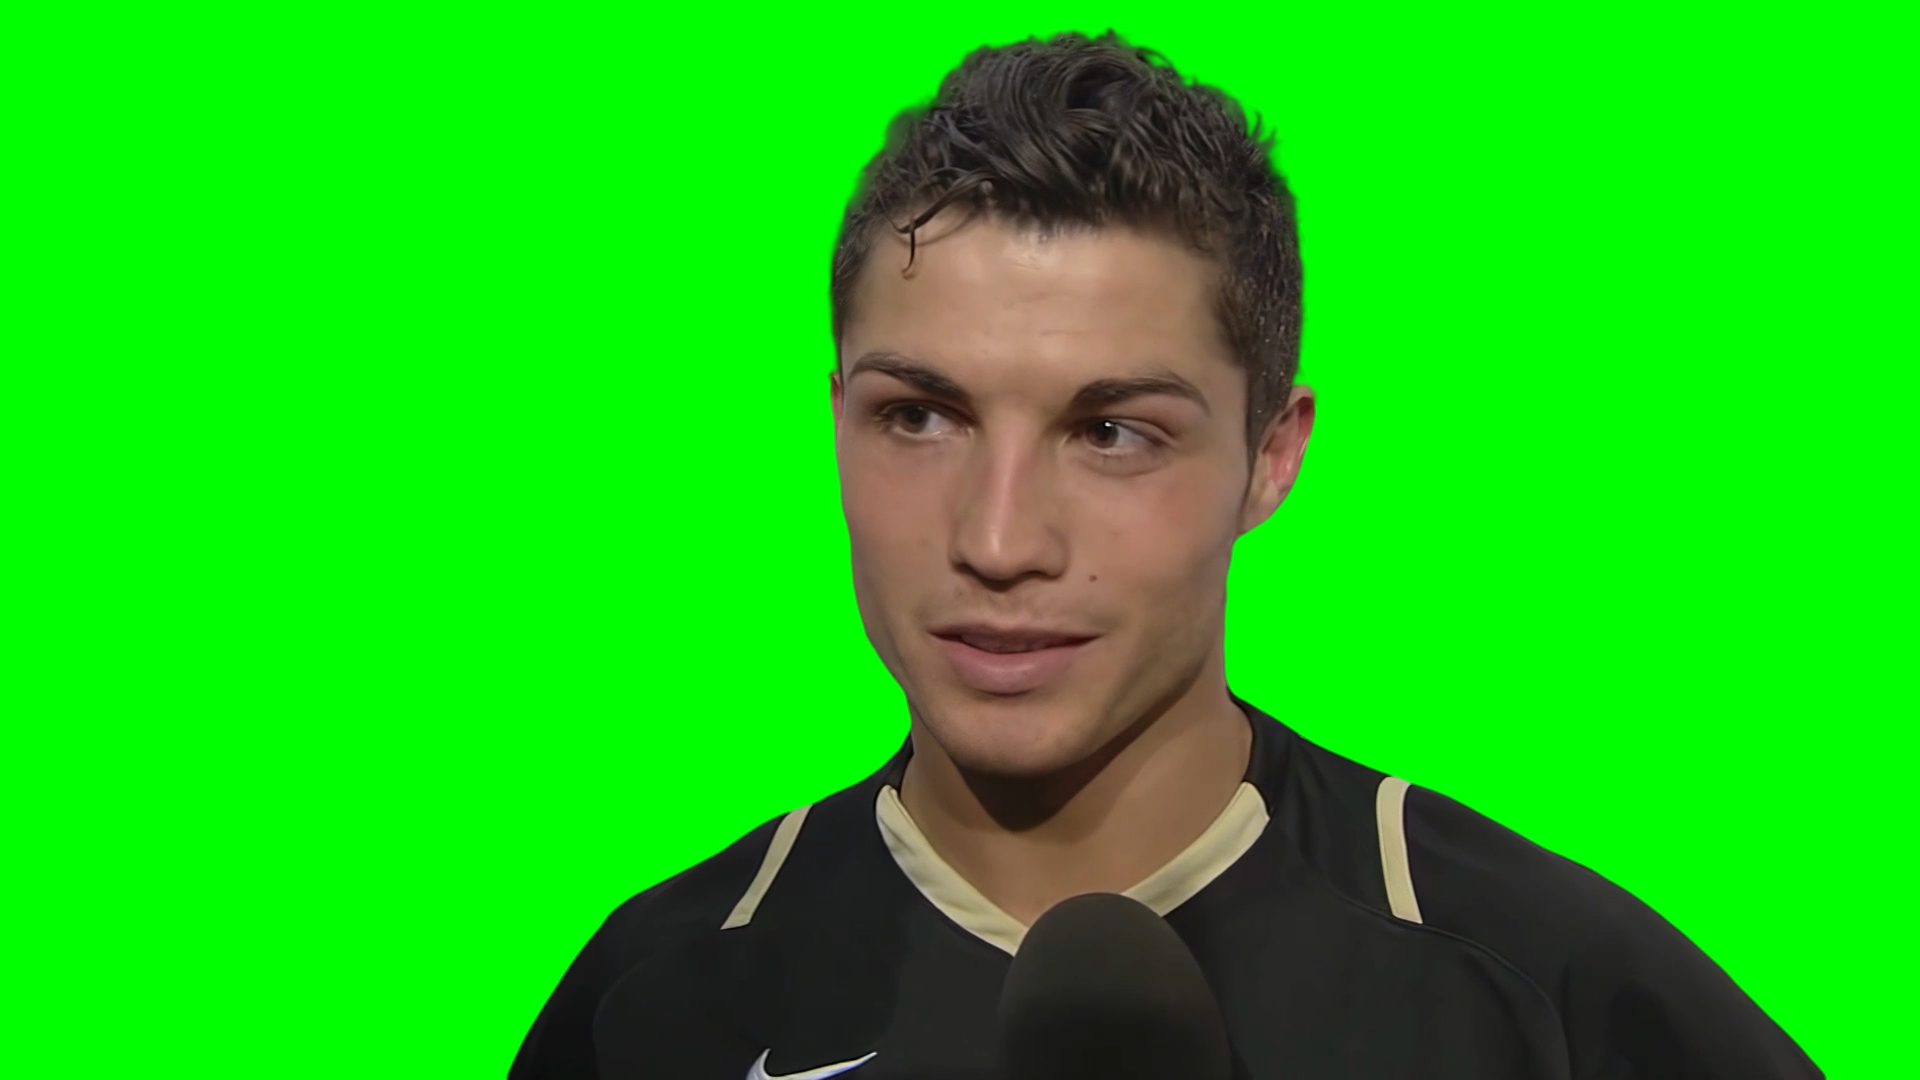 Cristiano Ronaldo - I’m too good (Green Screen)